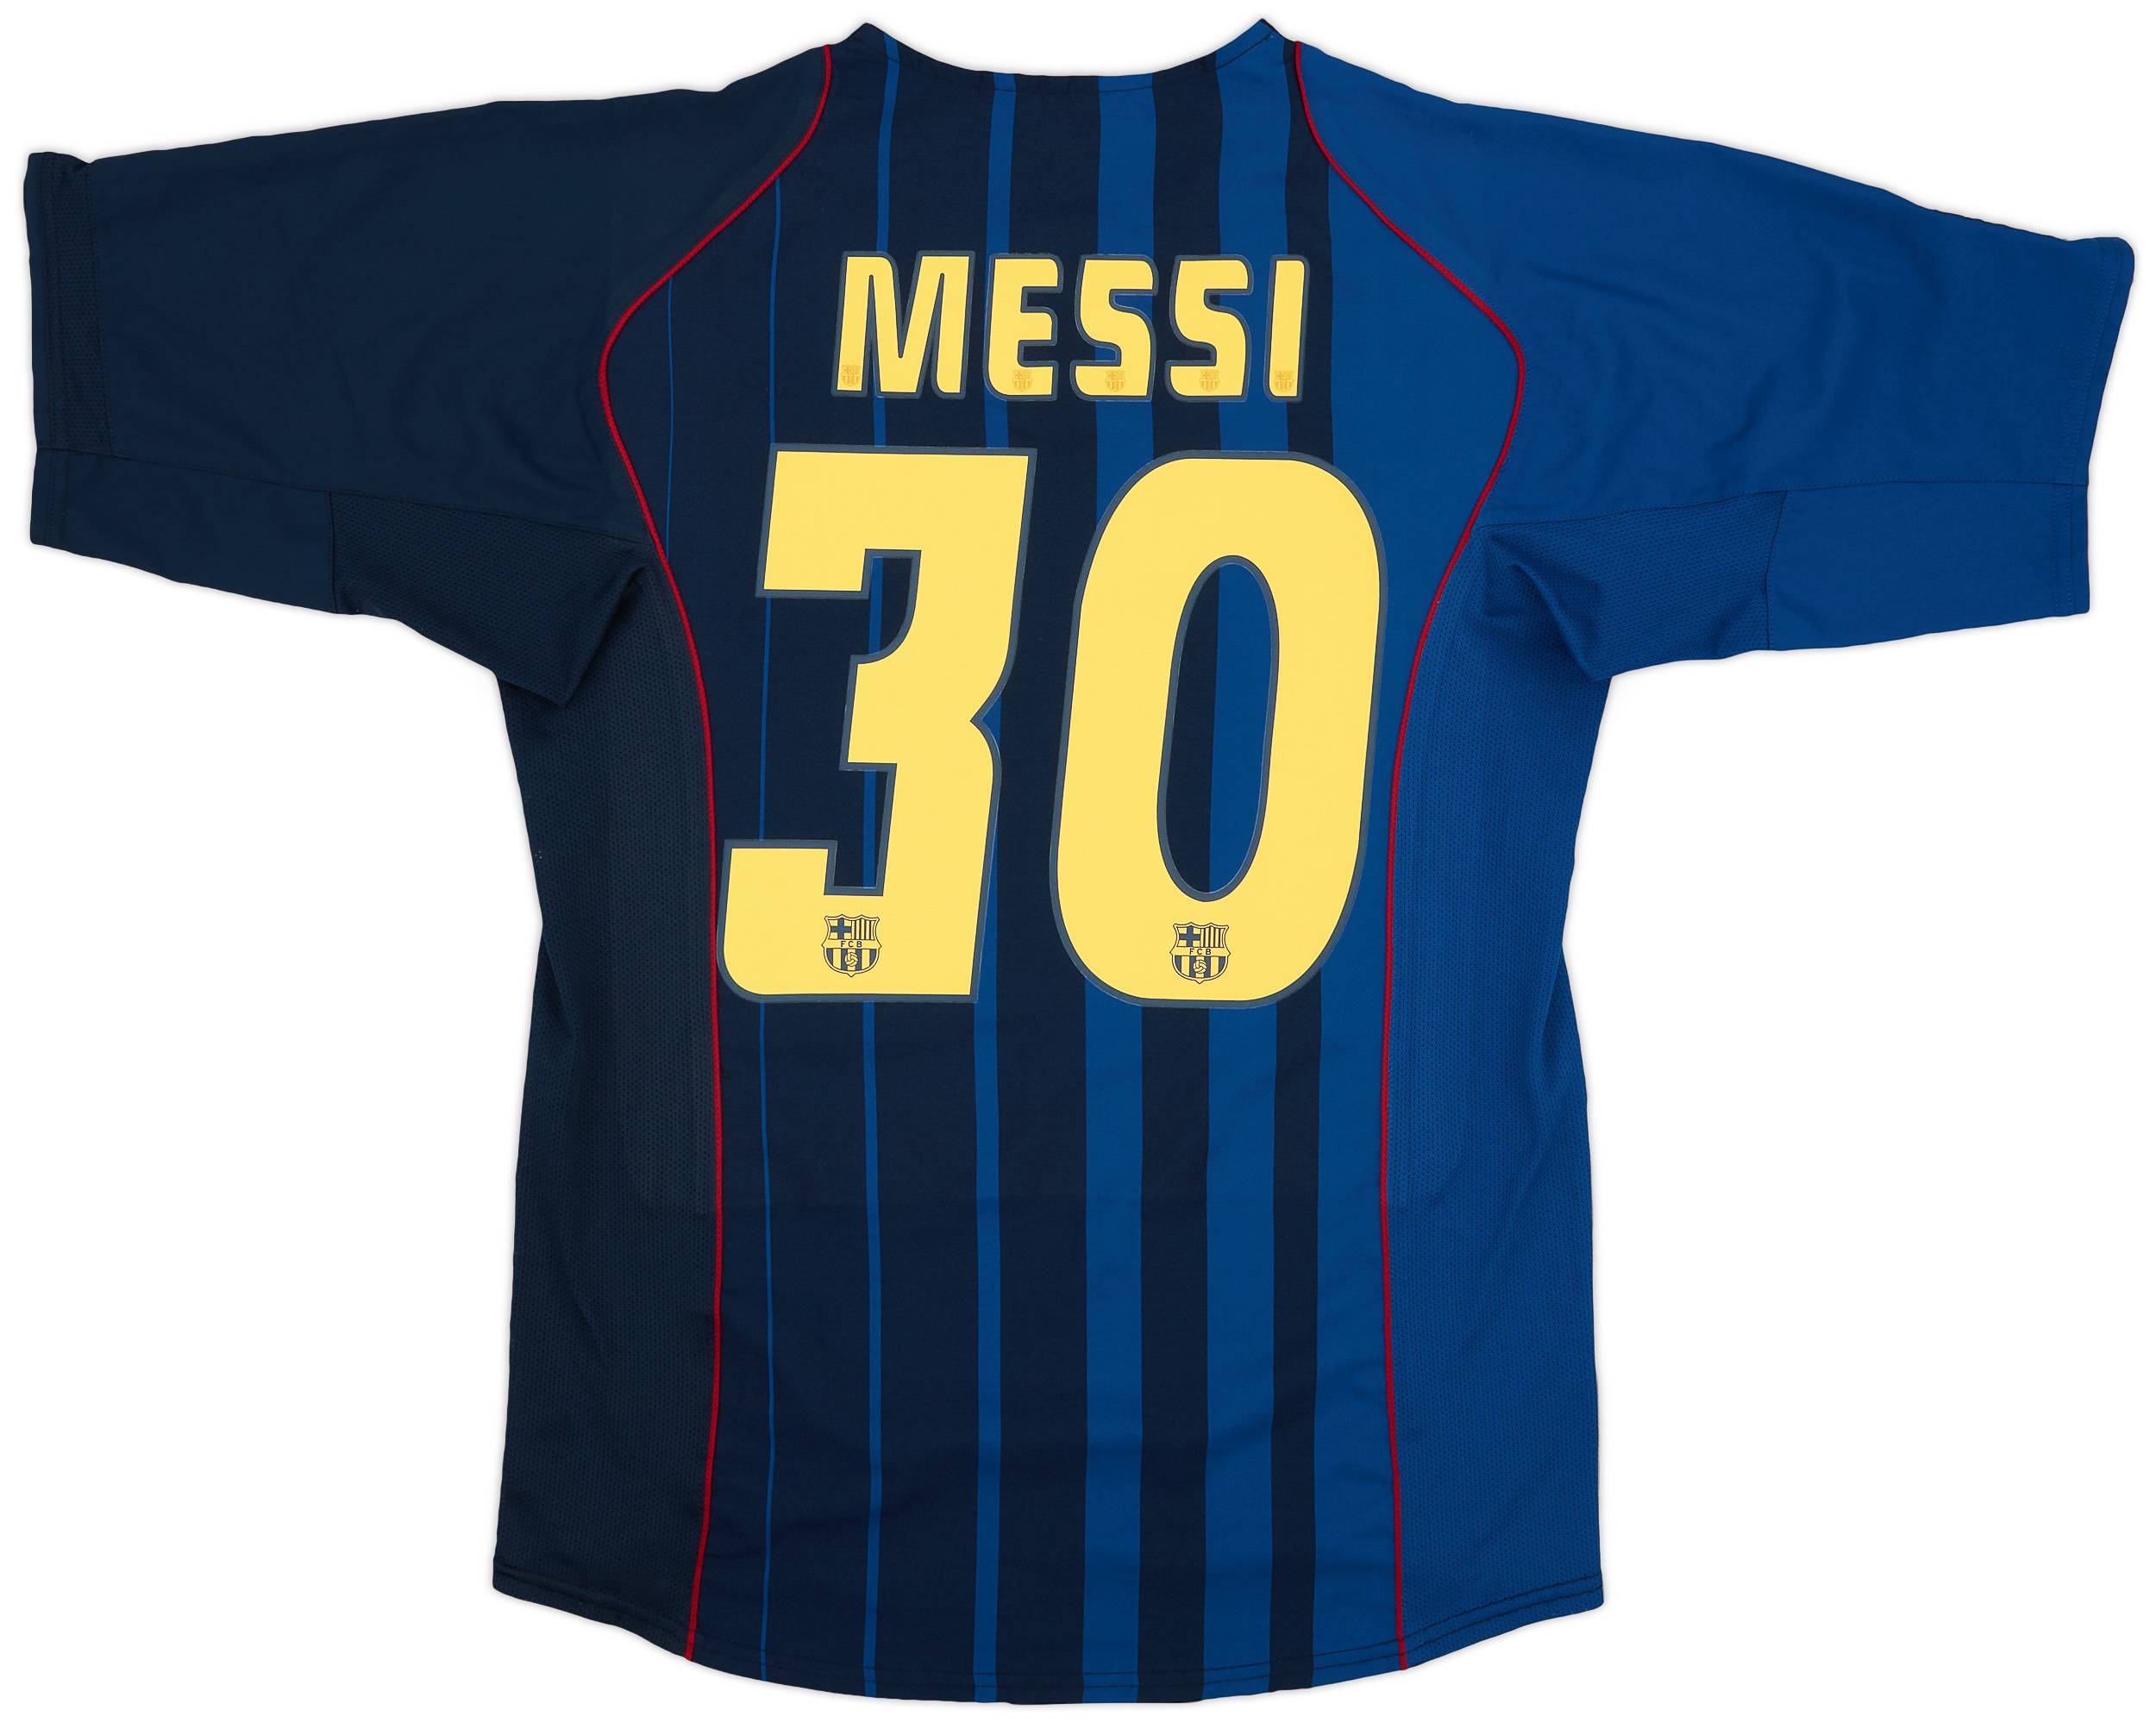 2004-05 Barcelona Away Shirt Messi #30 - 9/10 - (M)